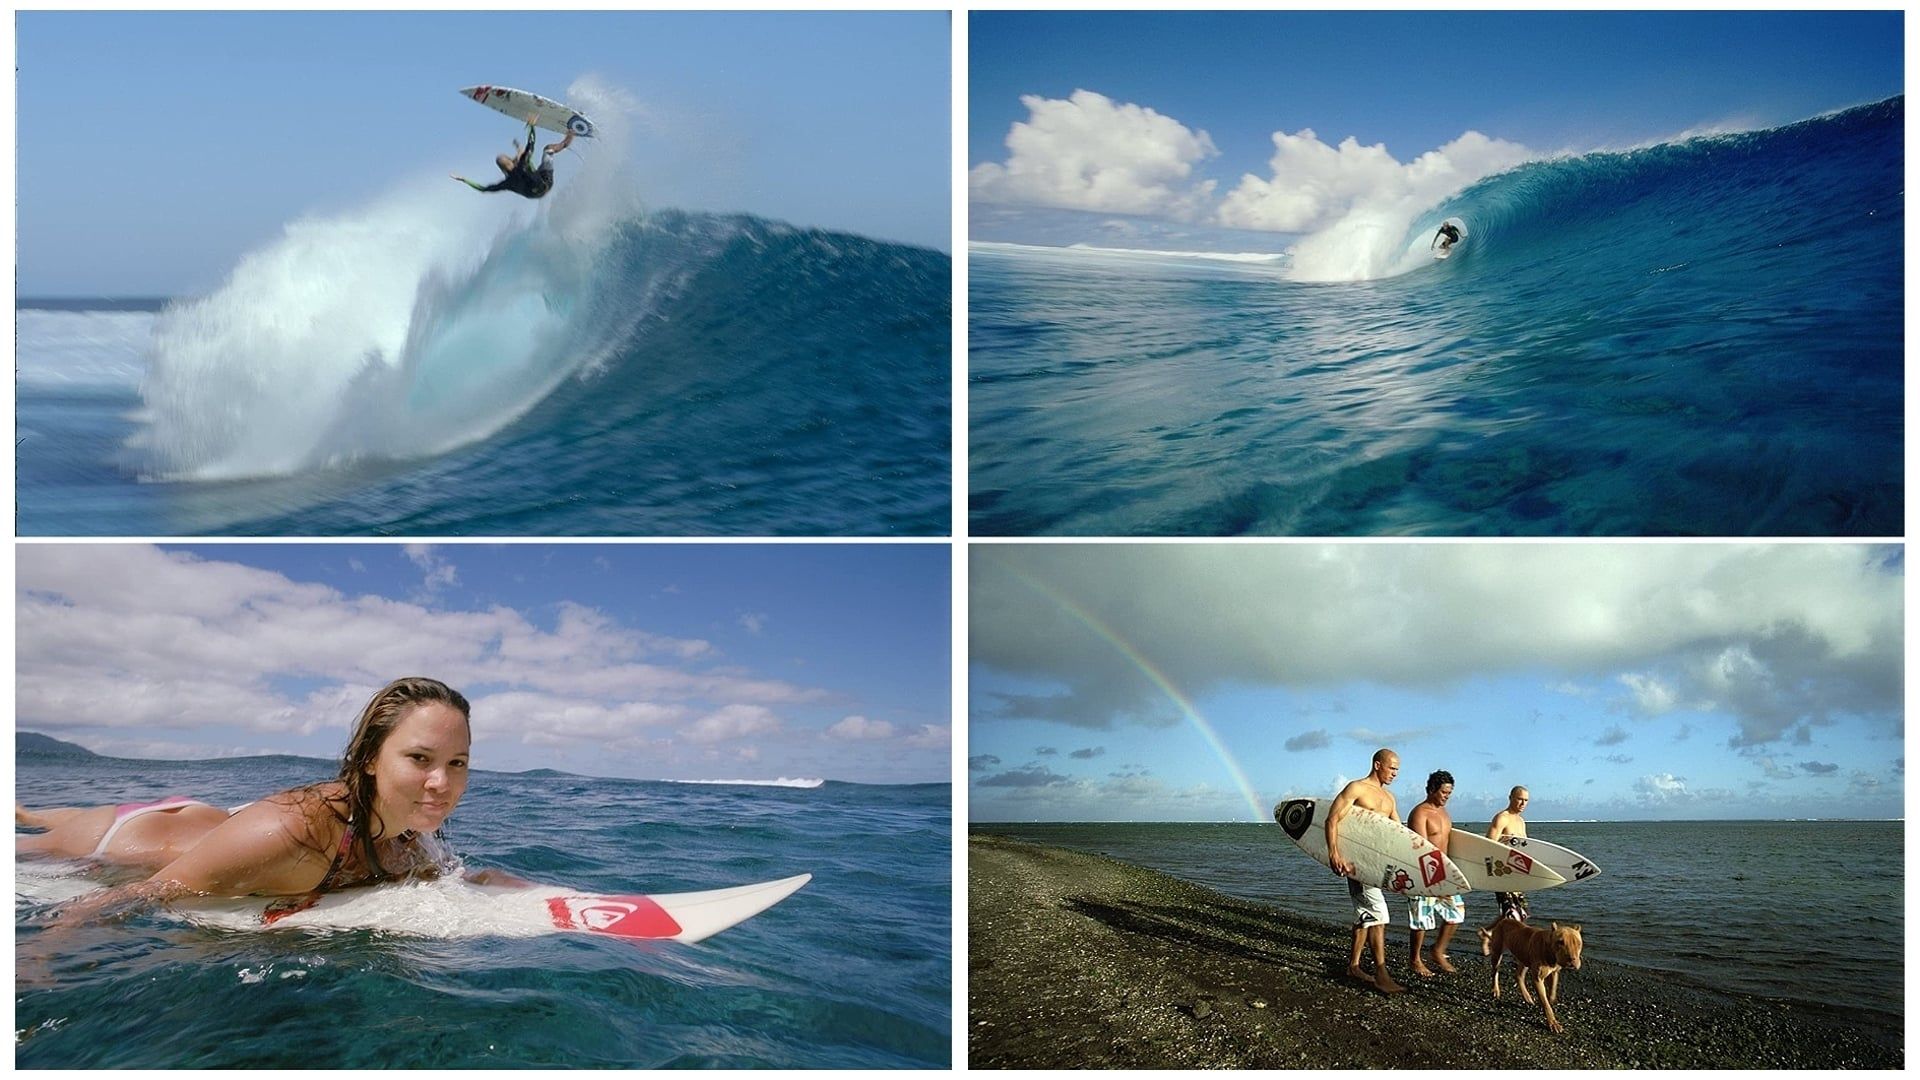 The Ultimate Wave Tahiti background